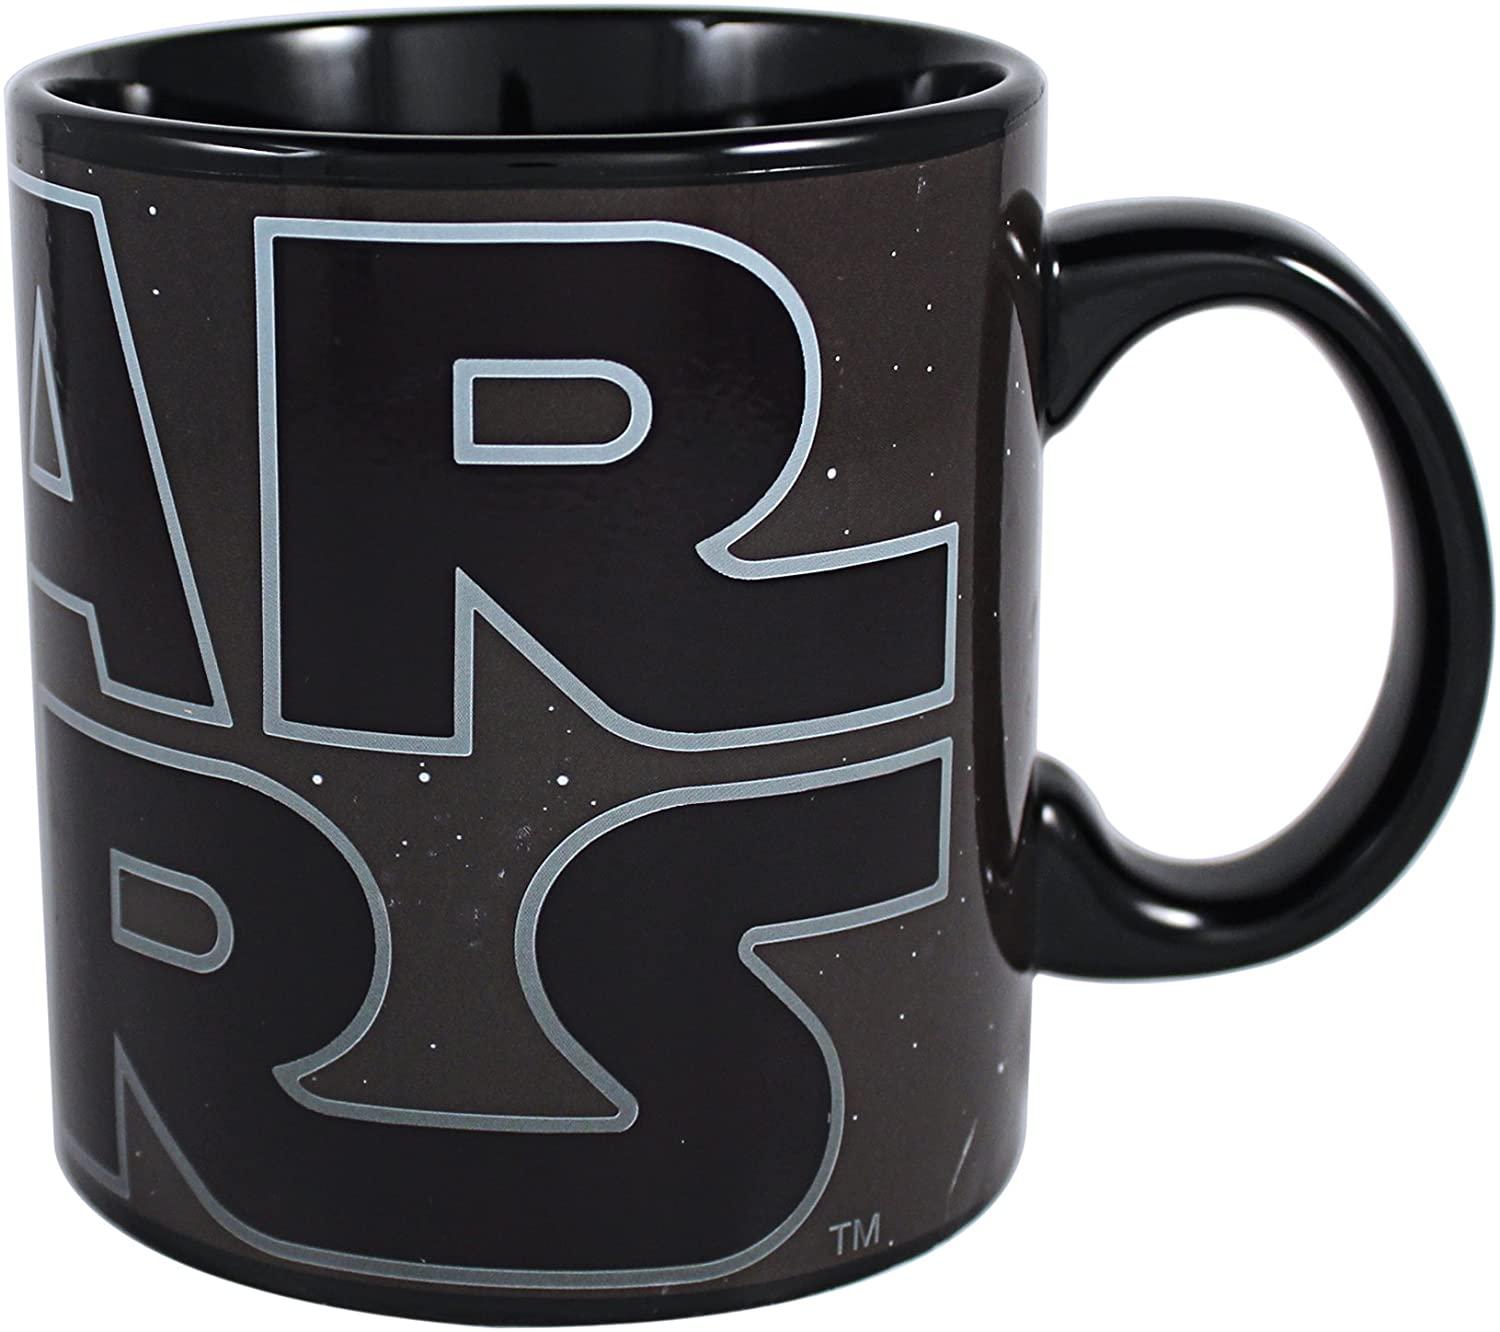 Star Wars Logo Heat Reveal Ceramic Mug for $7.86